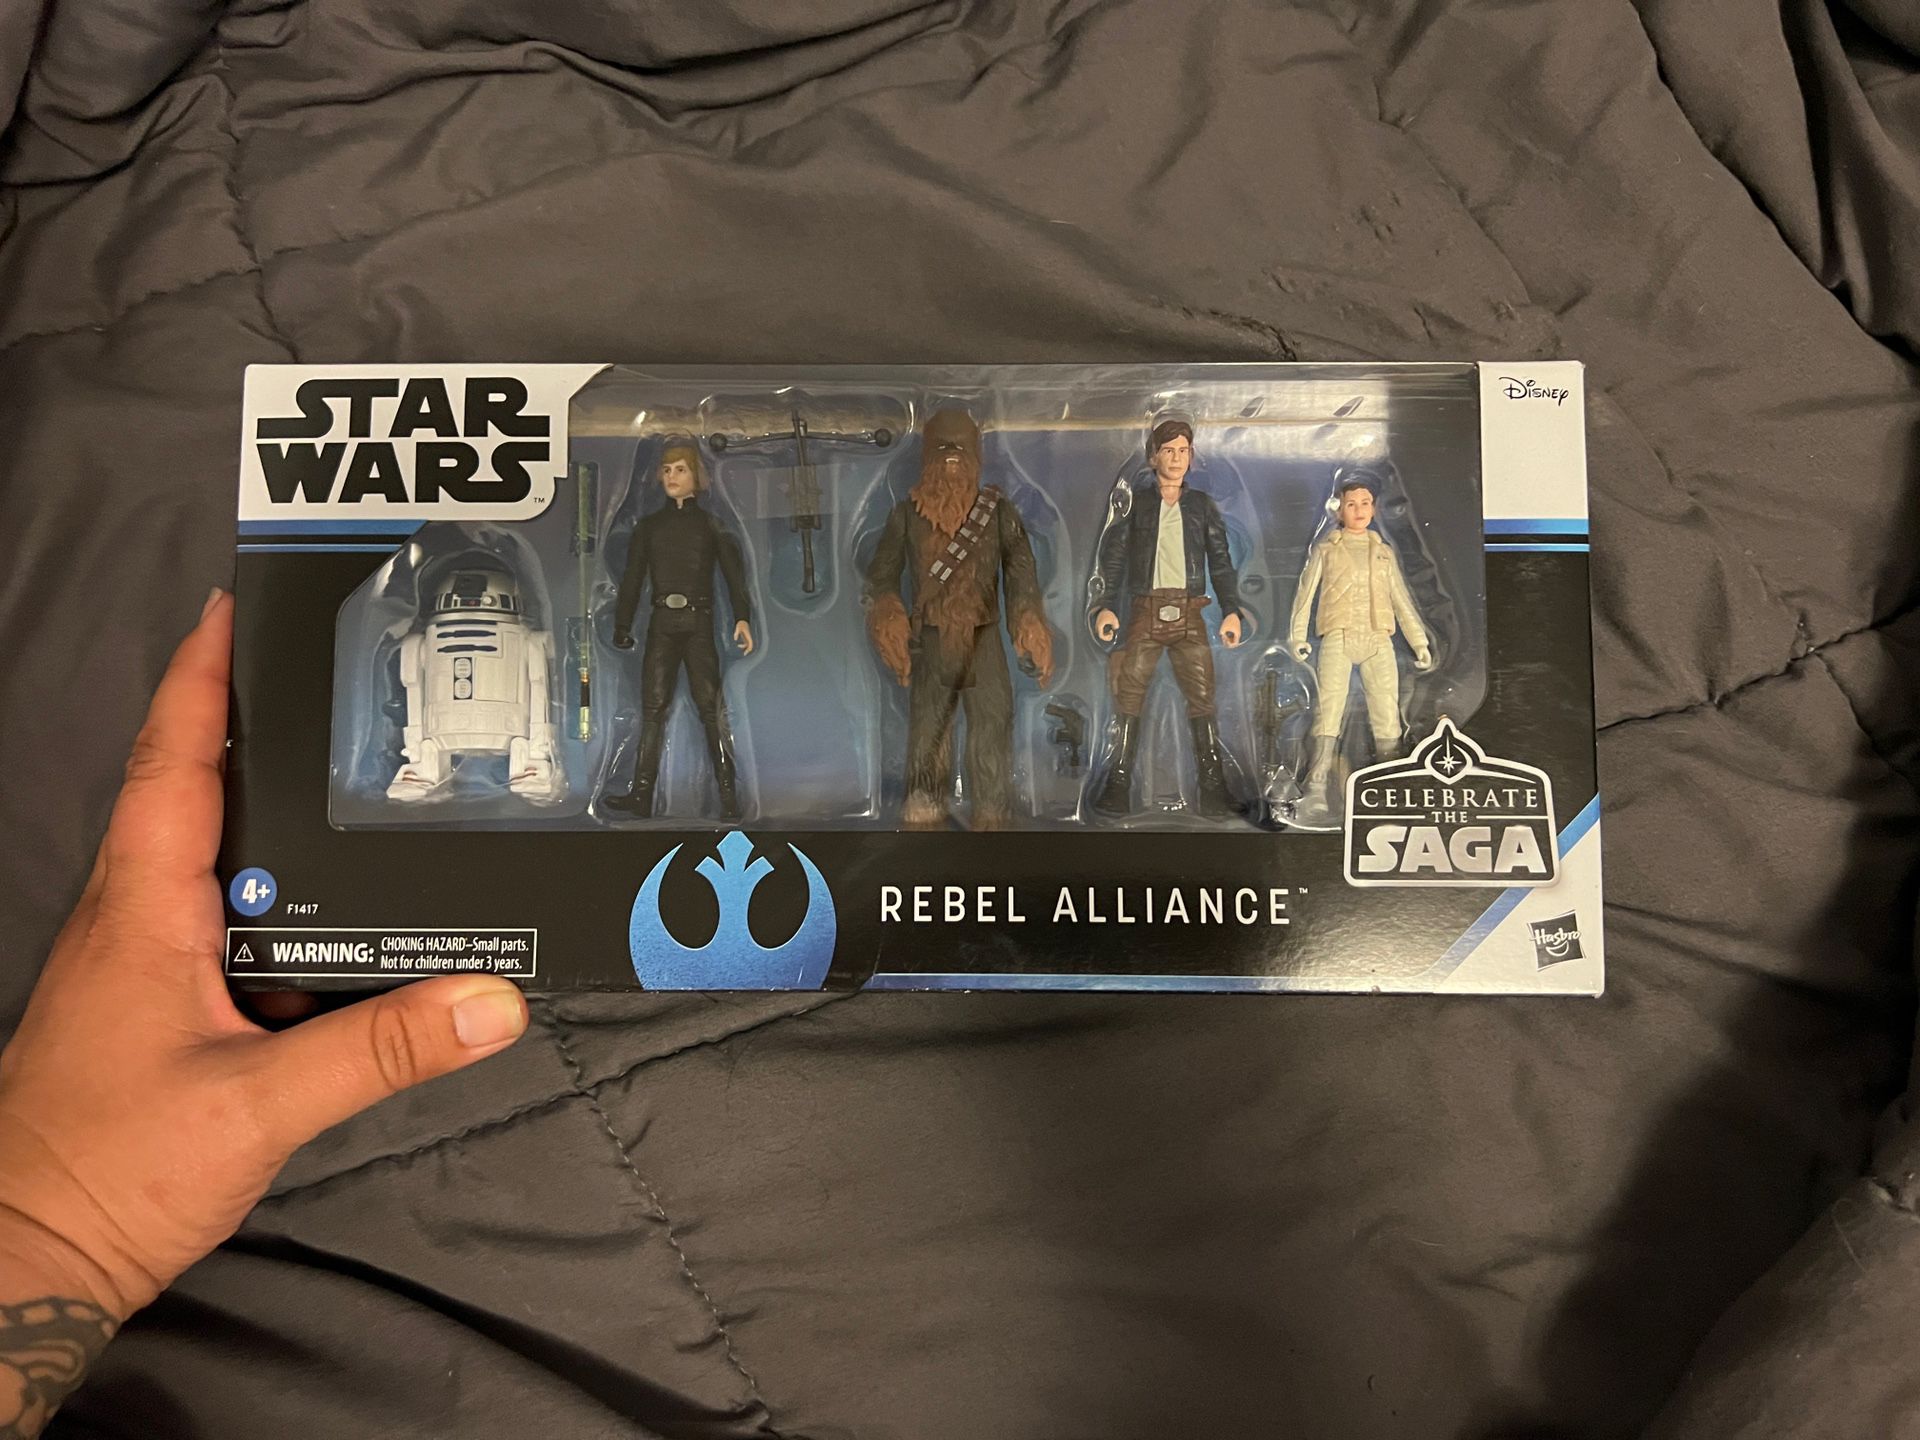 STAR WARS Rebel Alliance/ Celebrate the Saga Figurine Set